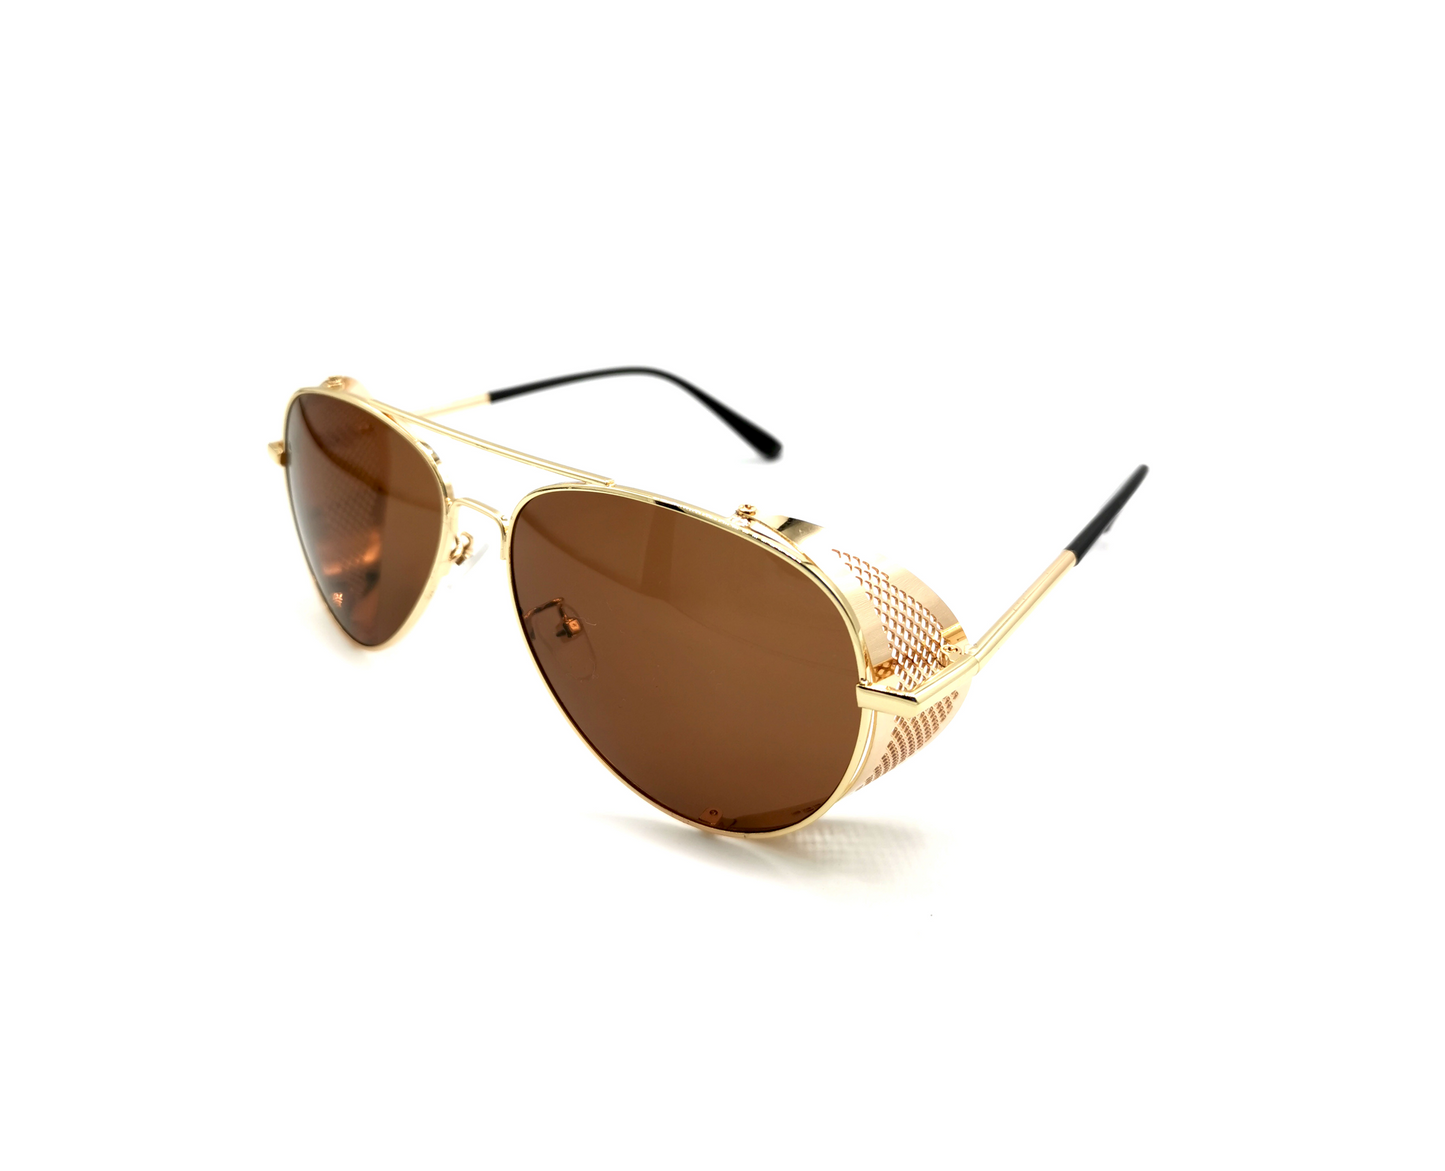 NS Classic - 002 - Golden - Sunglasses